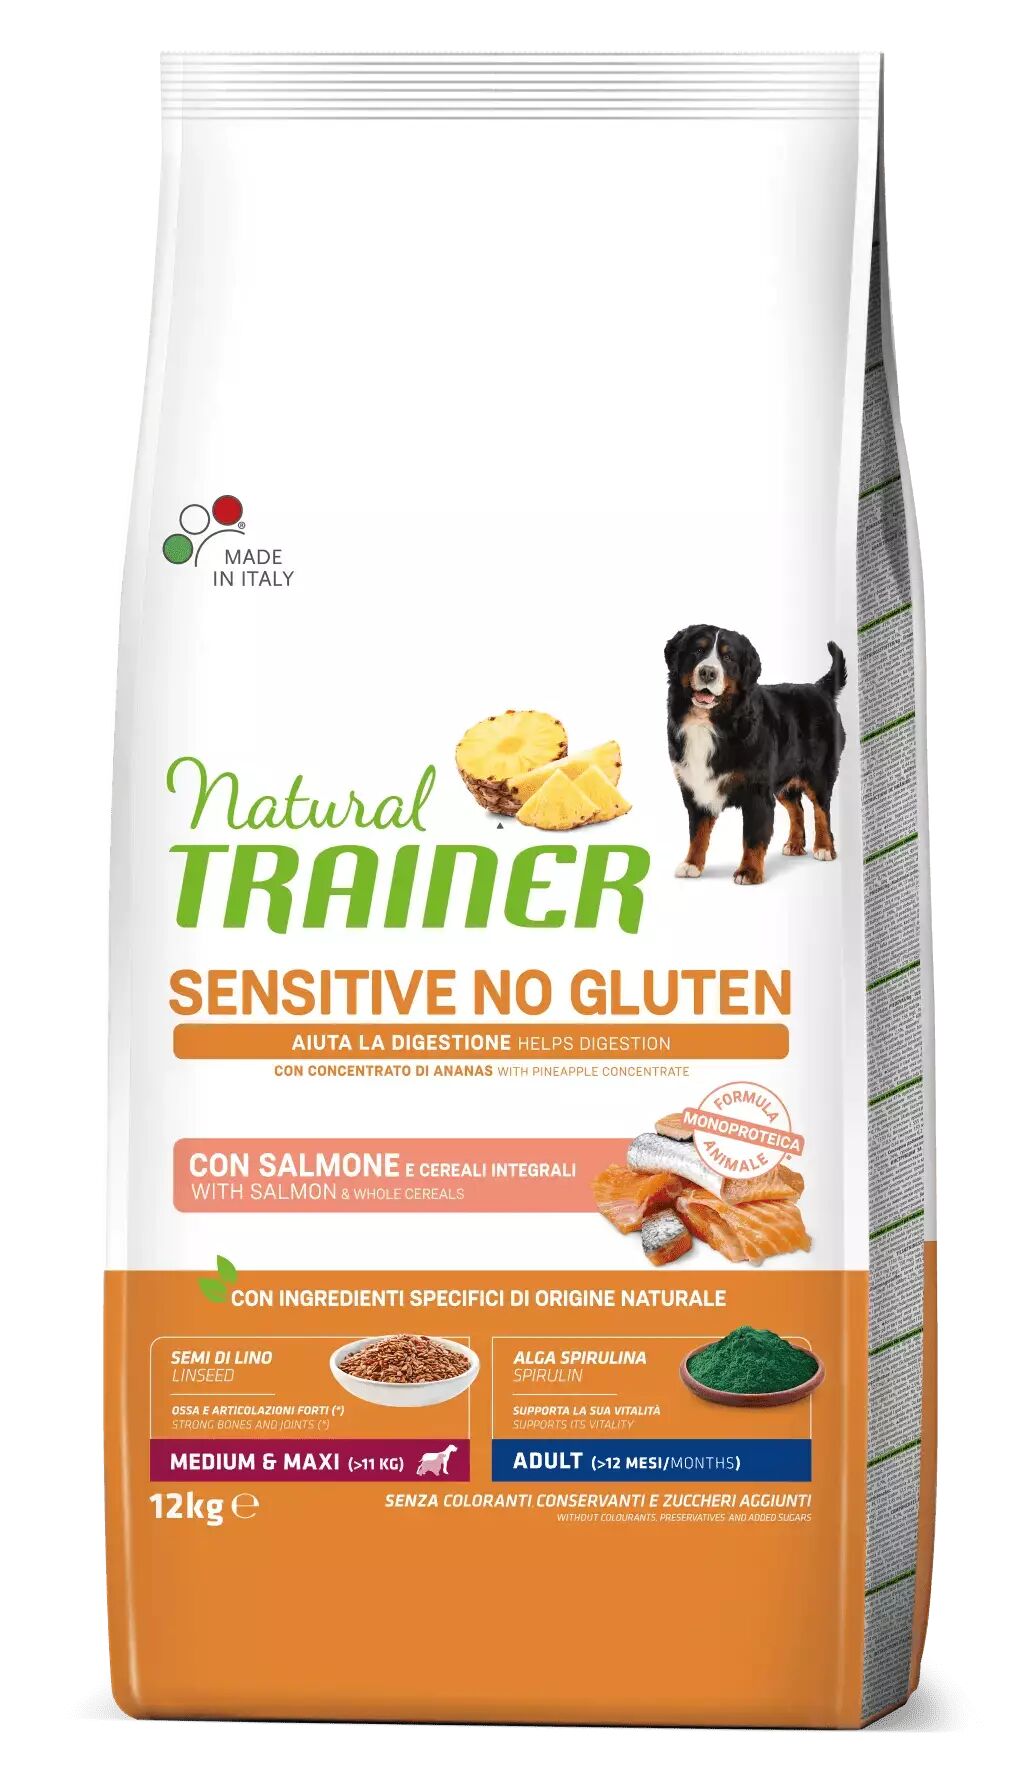 Trainer - Nova Food Natural Trainer Sensitive No Gluten Cane Adulto Medium e Maxi Salmone 12 Kg 12.00 kg